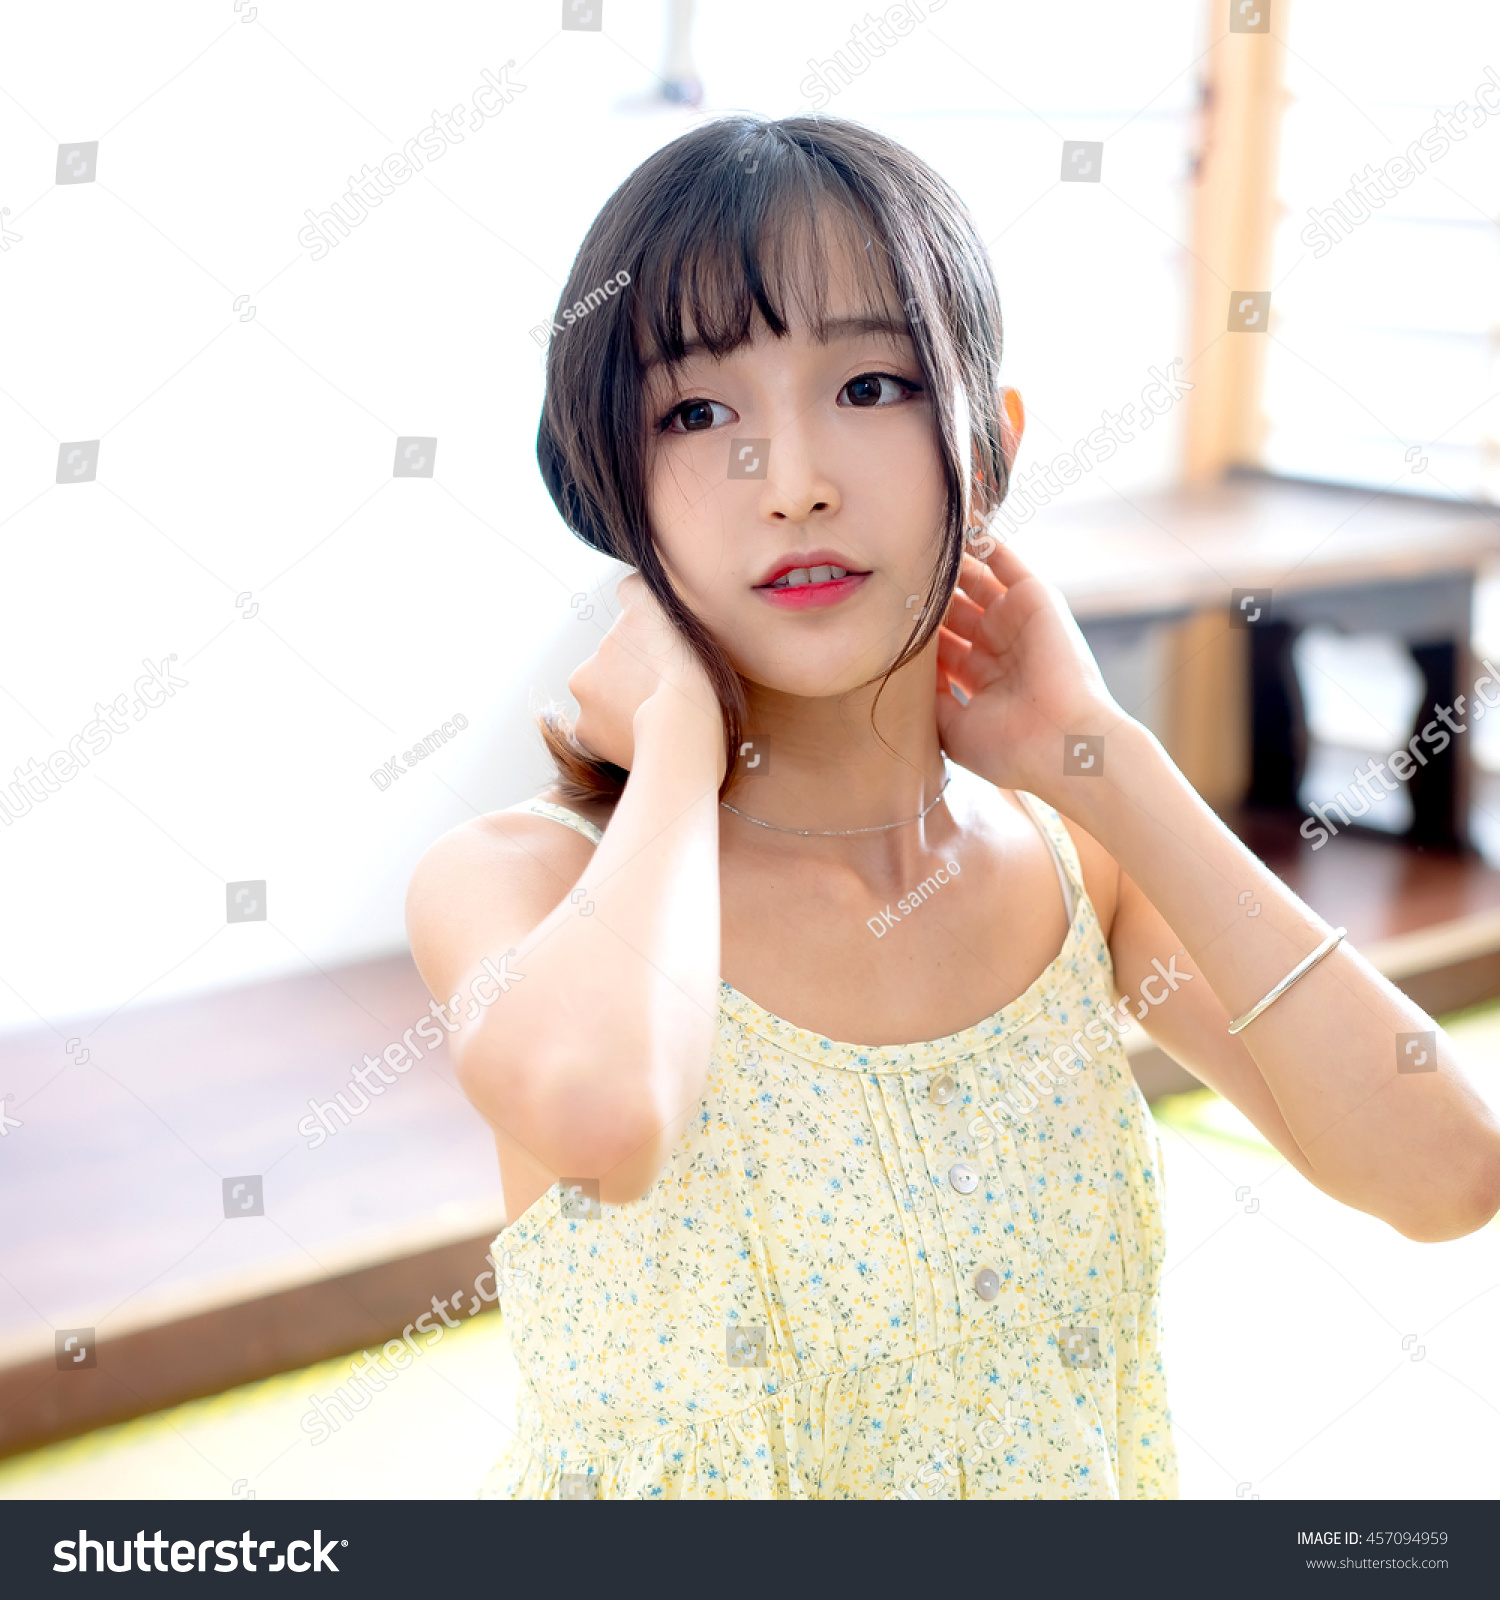 Hot Japan Girl Photo